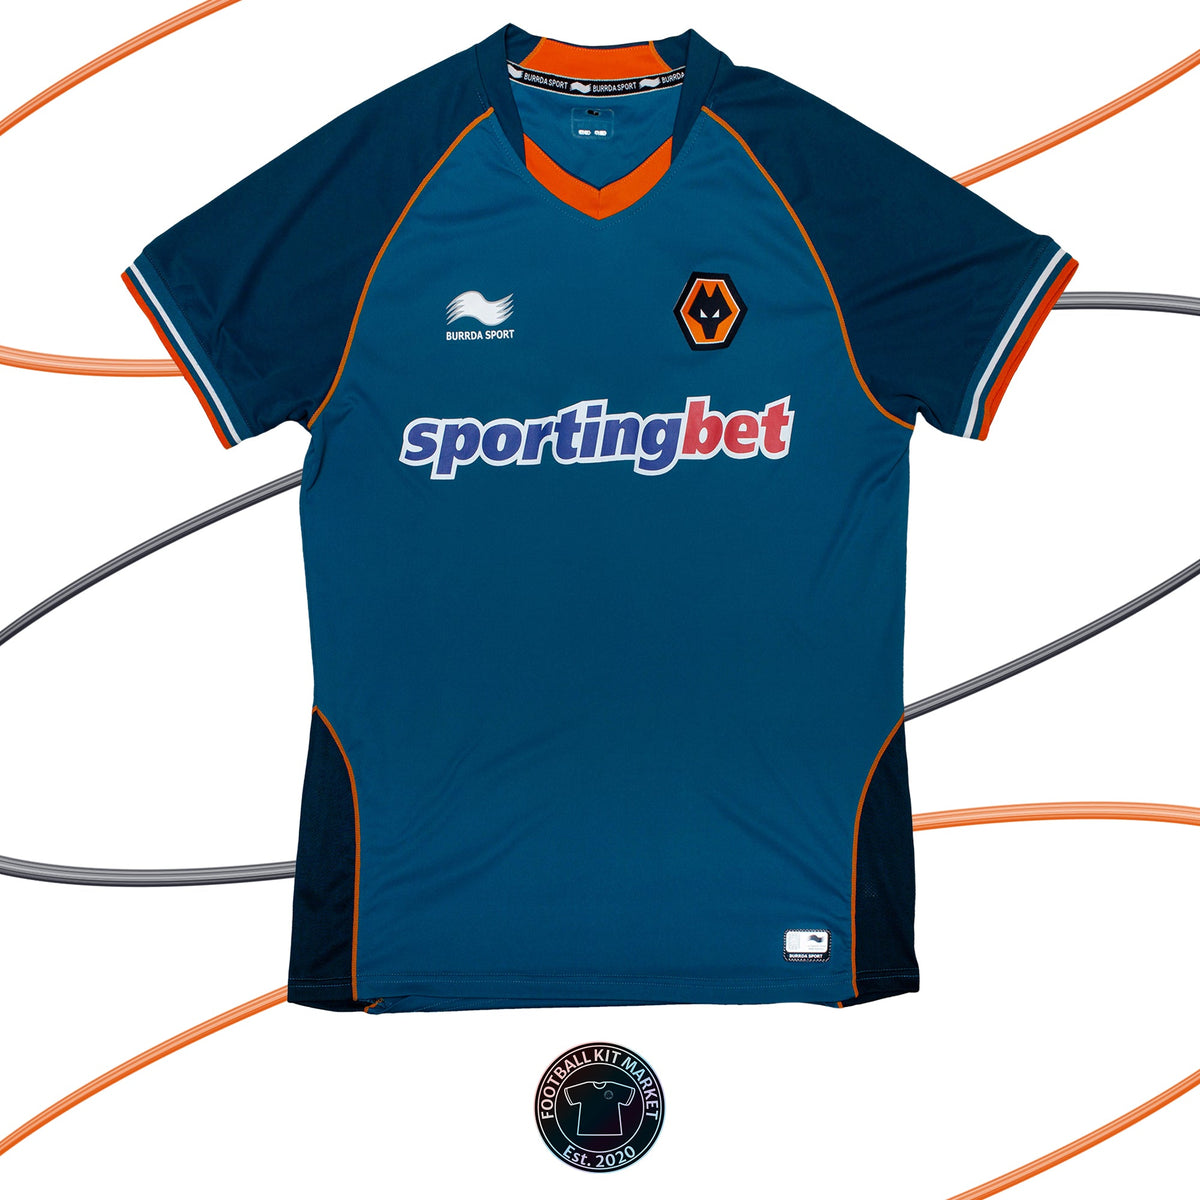 Genuine WOLVERHAMPTON WANDERERS (WOLVES) Away Shirt (2012-2013) - BURRDA SPORT (M) - Product Image from Football Kit Market